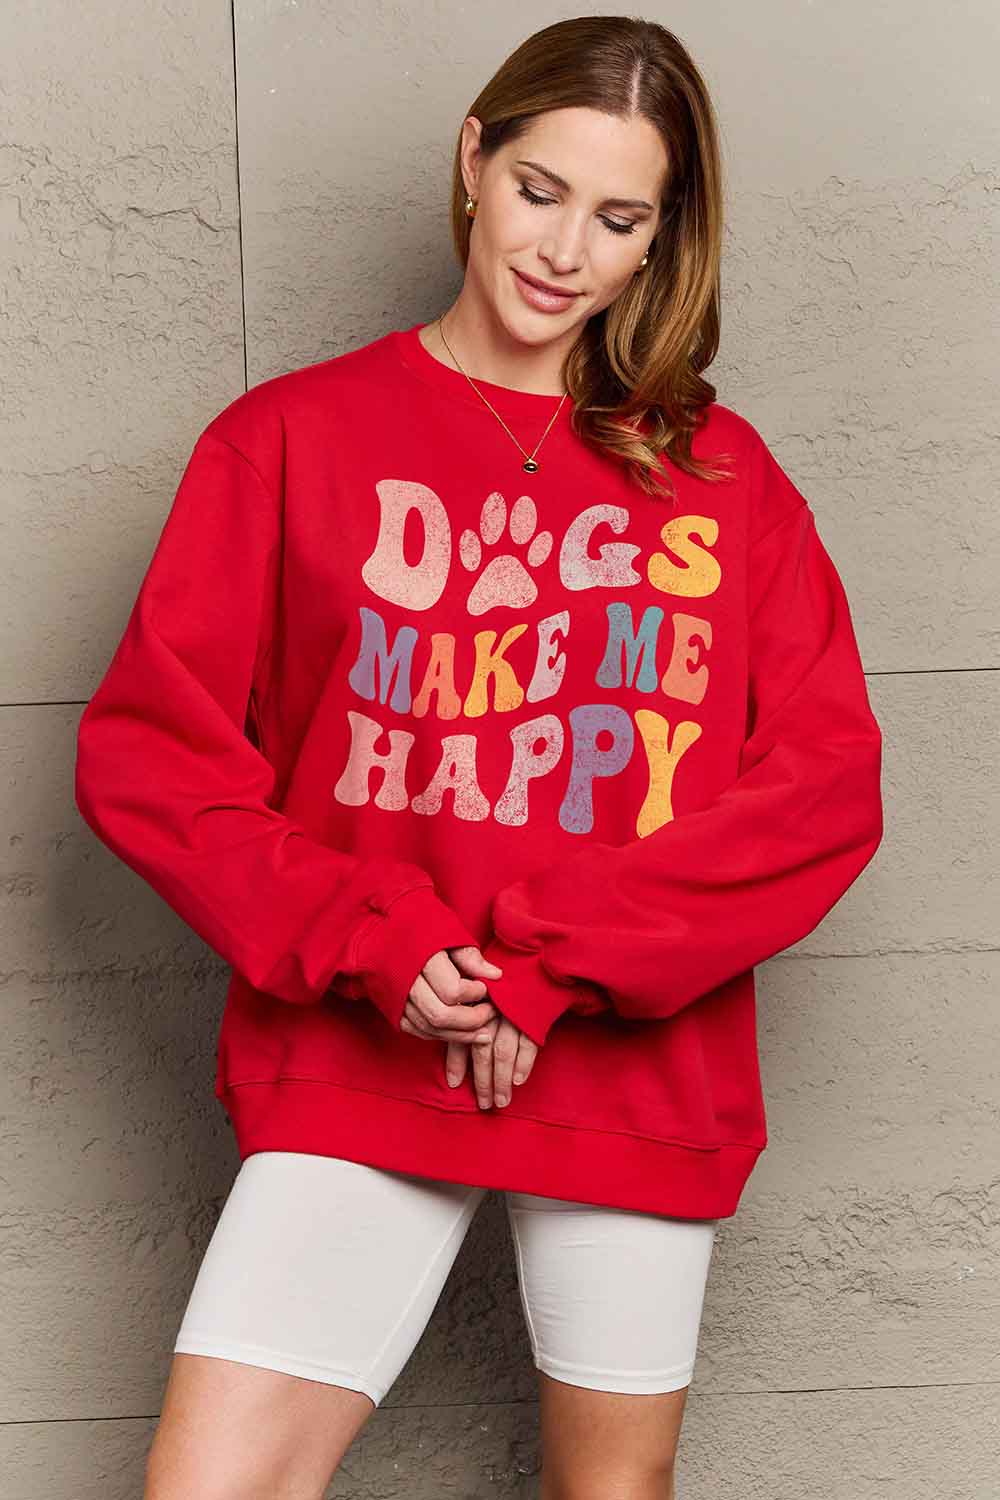 DOGS MAKE ME HAPPY Graphic Sweatshirt